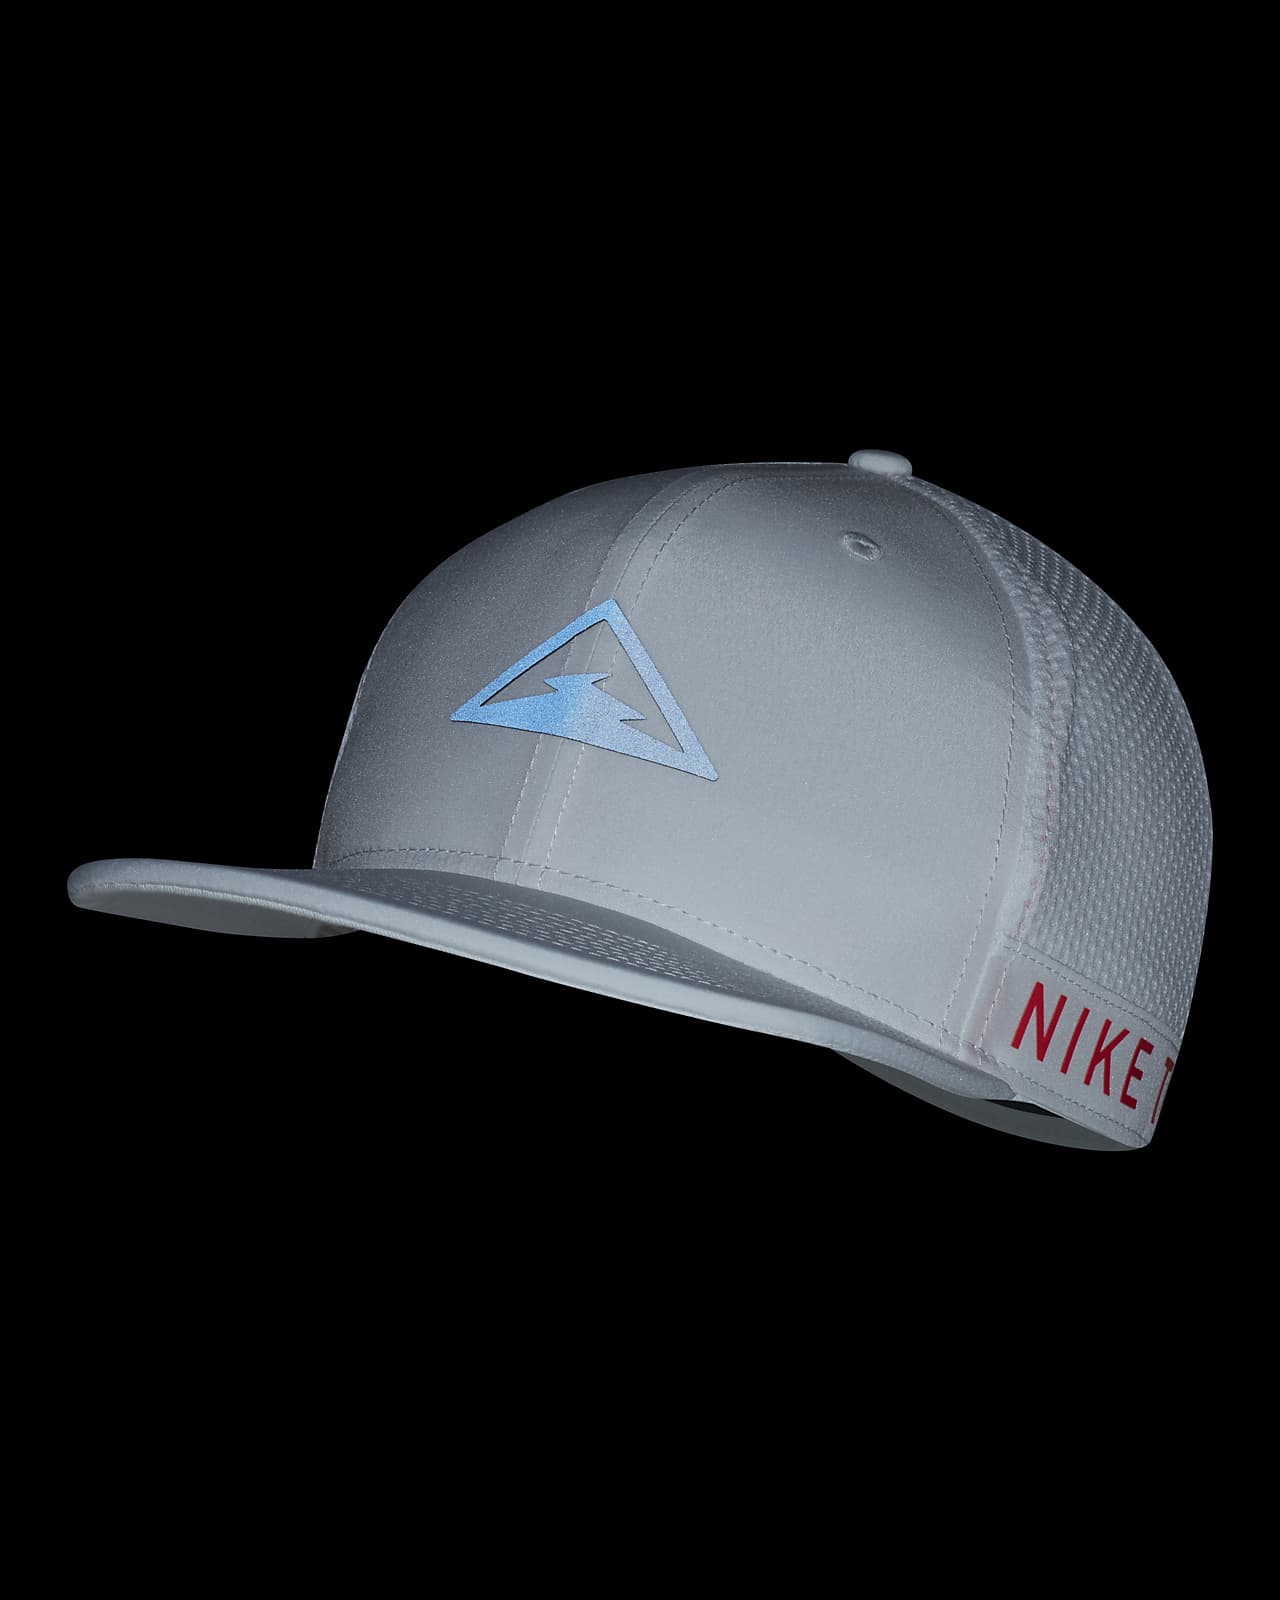 nike pro trail hat